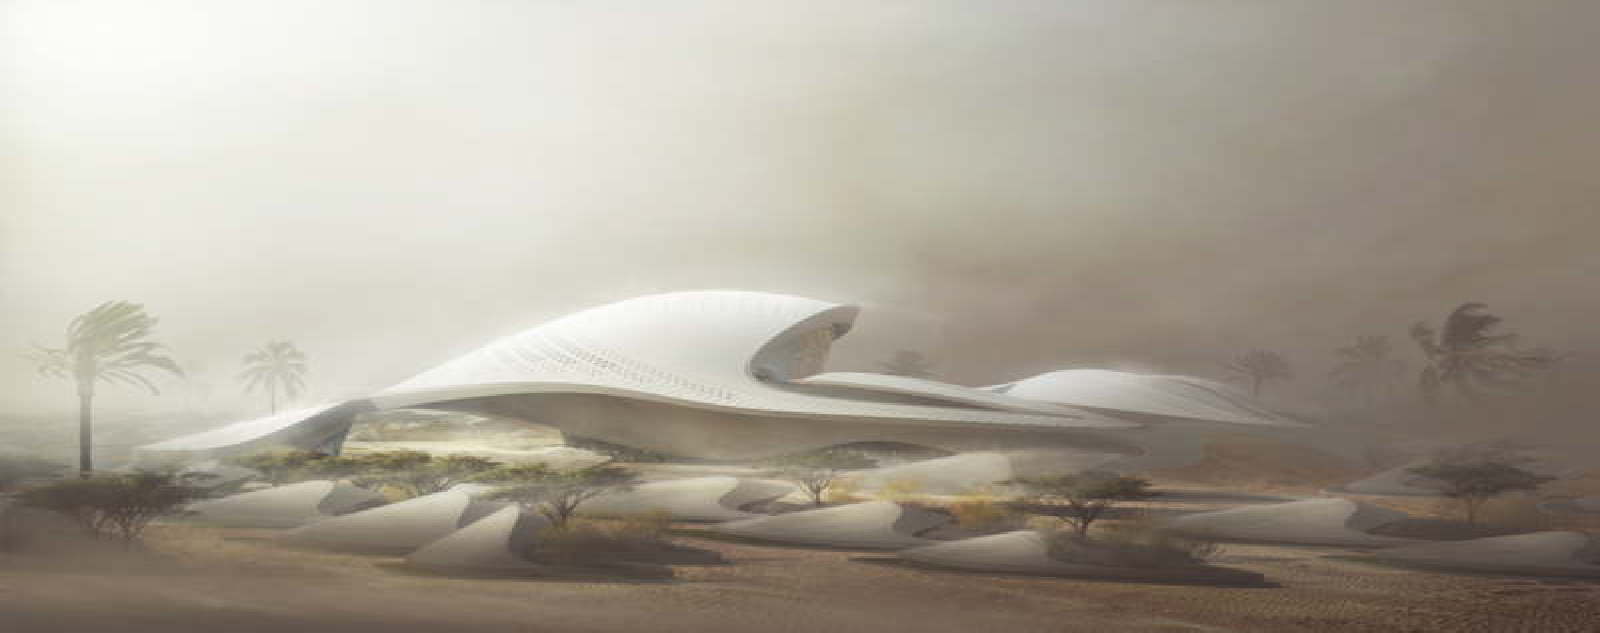 MIR Creative Studios animation for Bee'ah Headquarters Zaha Hadid  Architects | Floornature